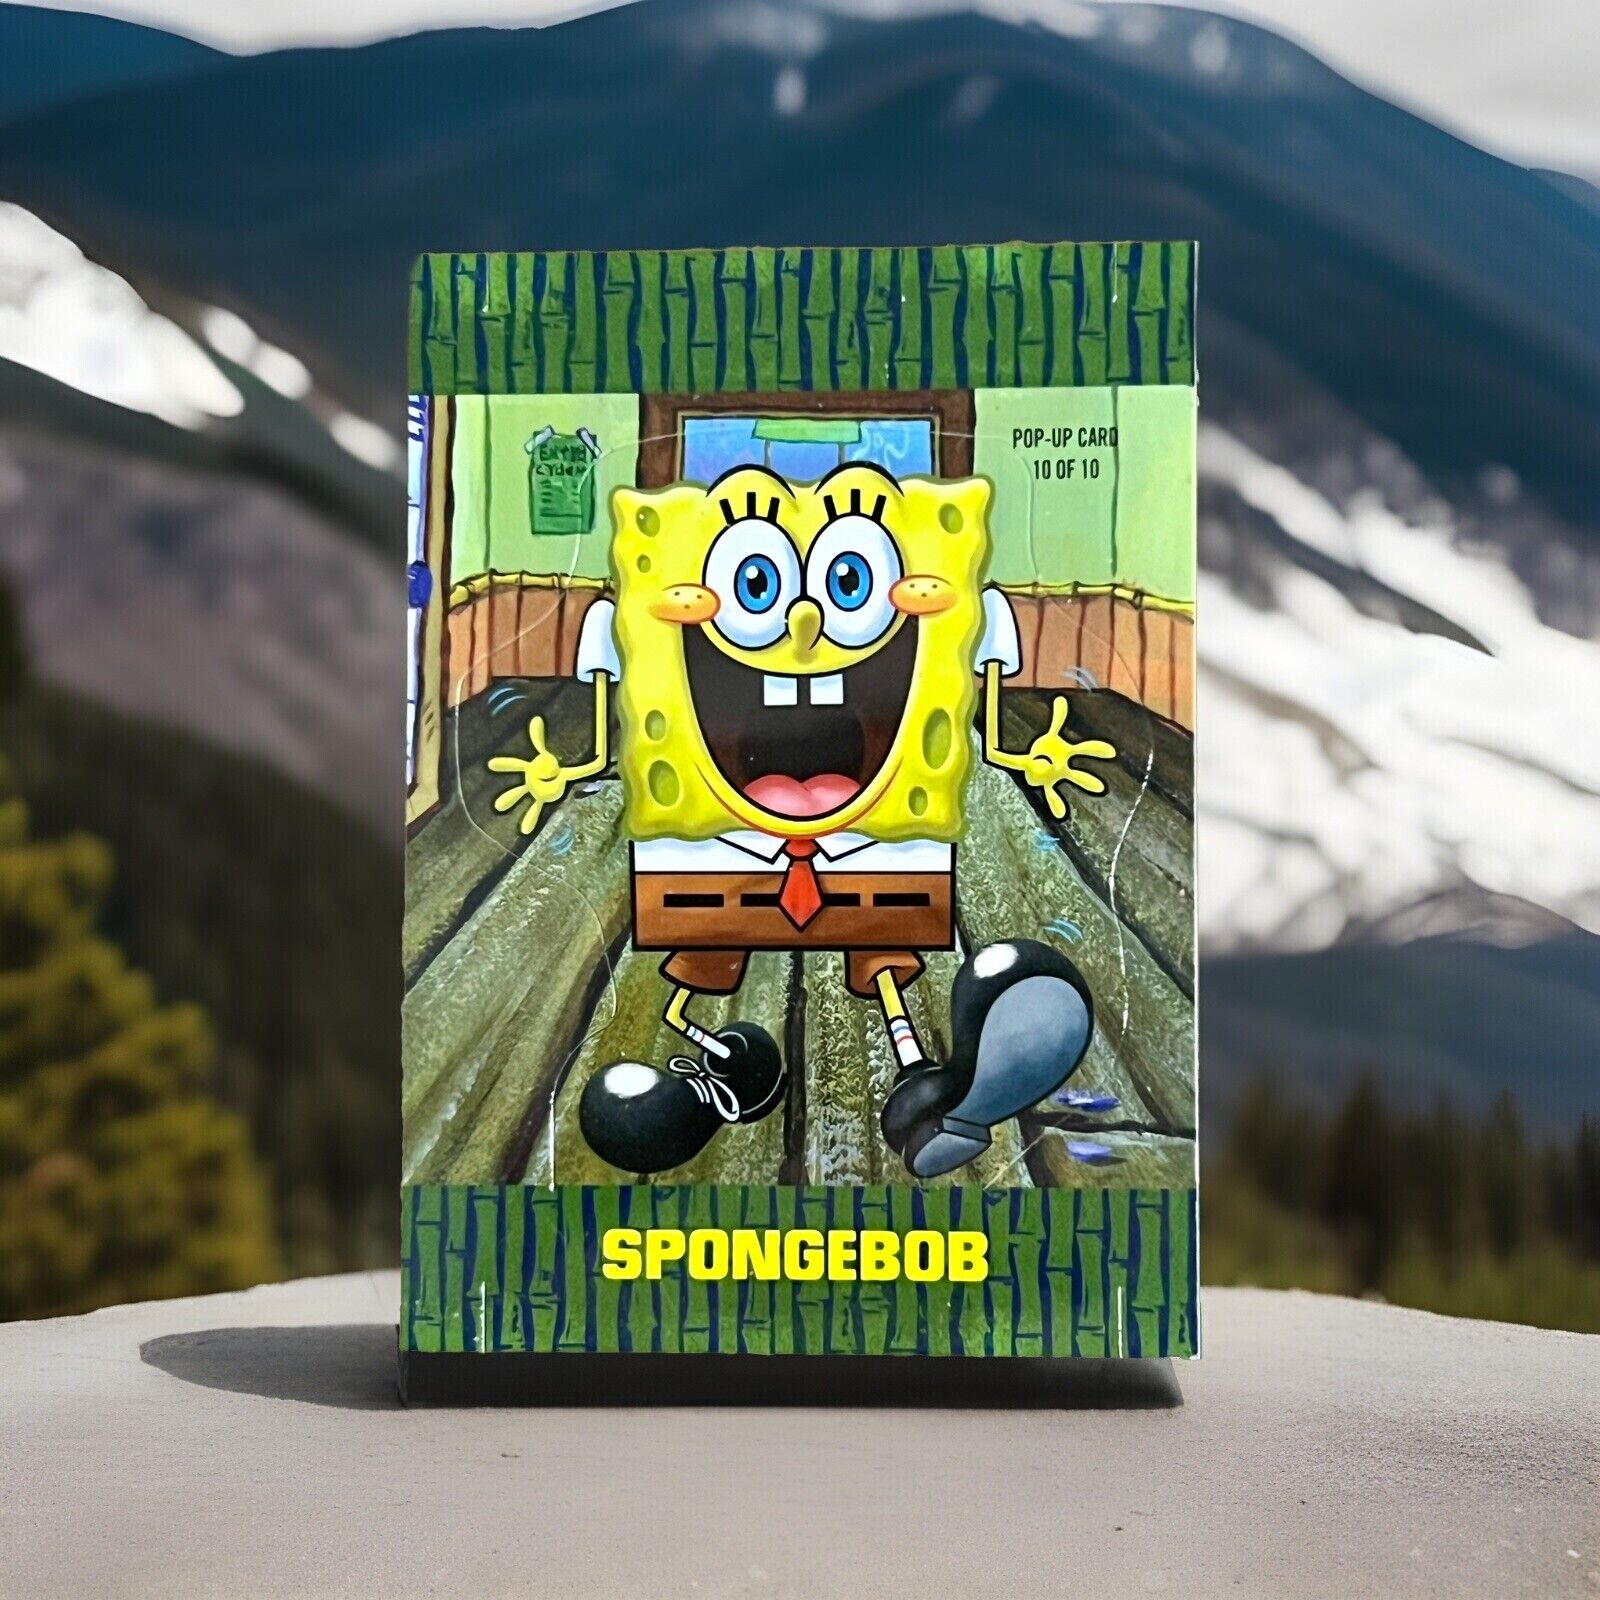 2009 Topps Viacom SpongeBob SquarePants Pop-Up Insert Card. Nickelodeon